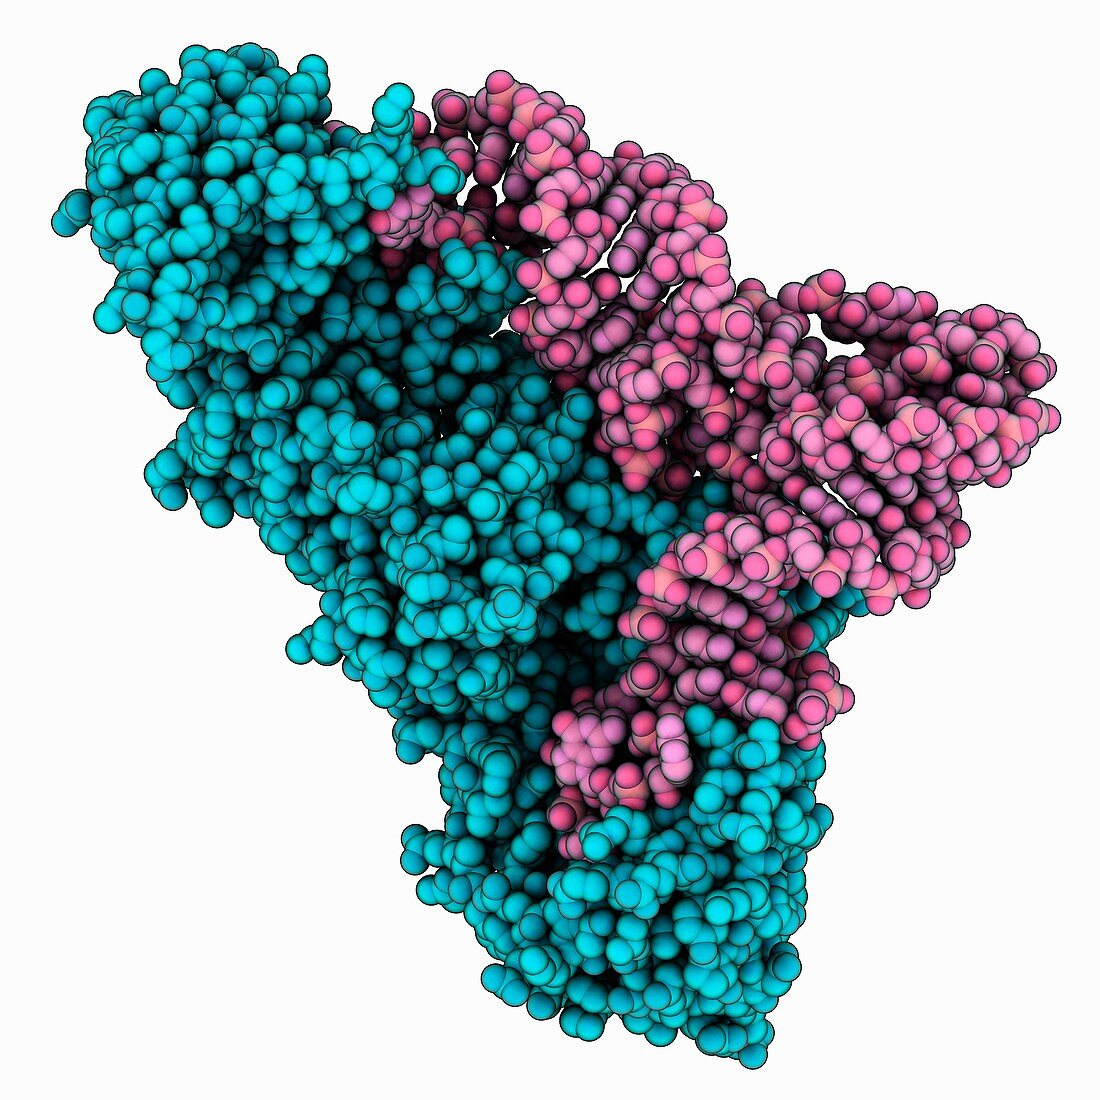 Transfer RNA complex